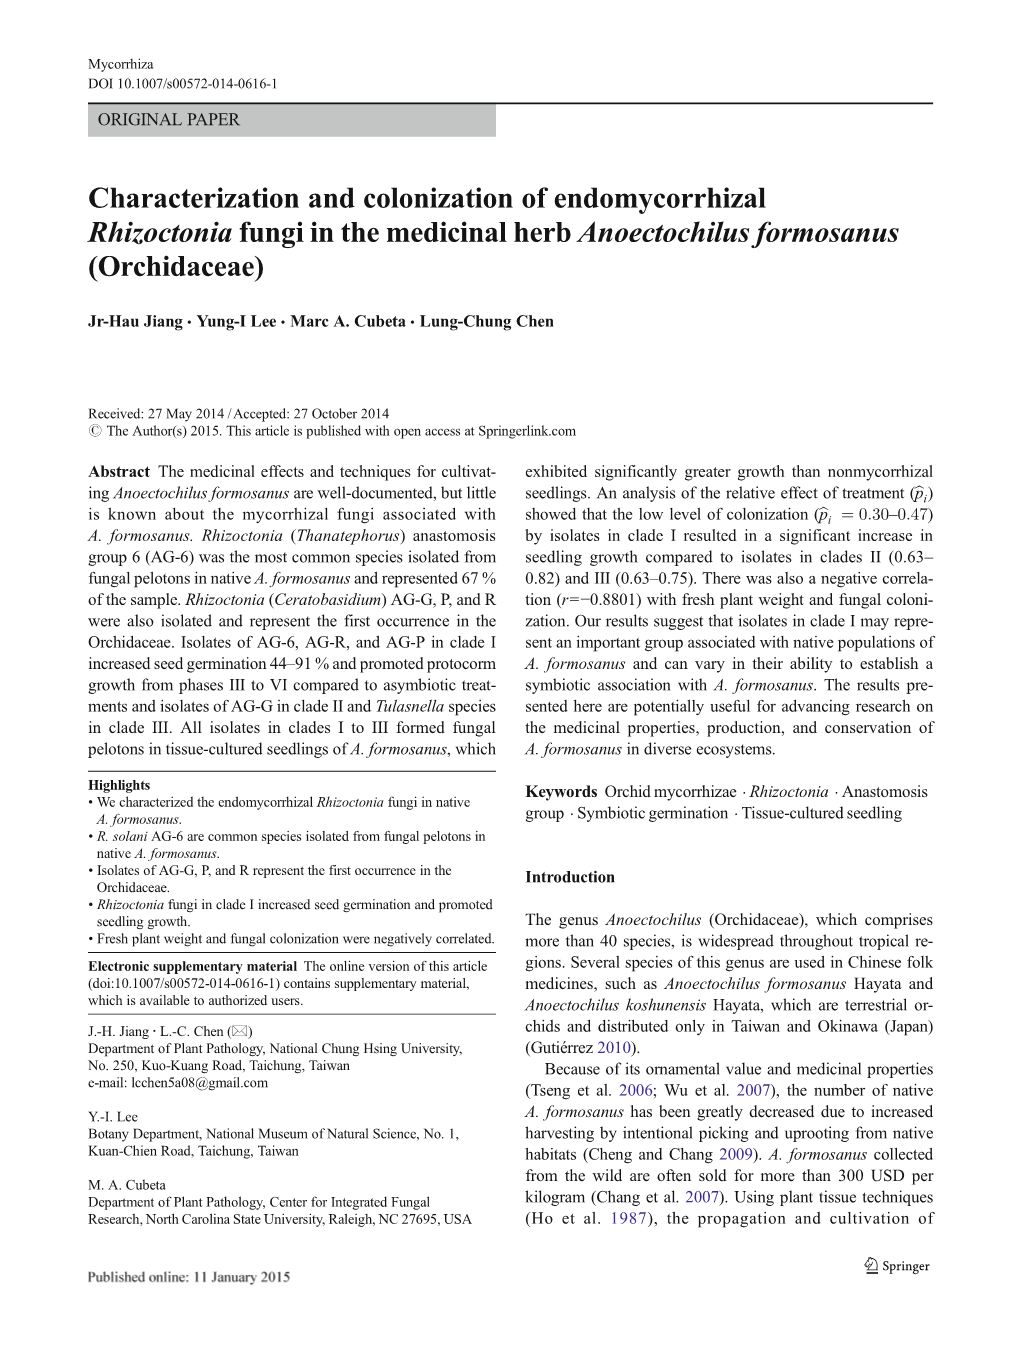 Characterization and Colonization of Endomycorrhizal Rhizoctonia Fungi in the Medicinal Herb Anoectochilus Formosanus (Orchidaceae)